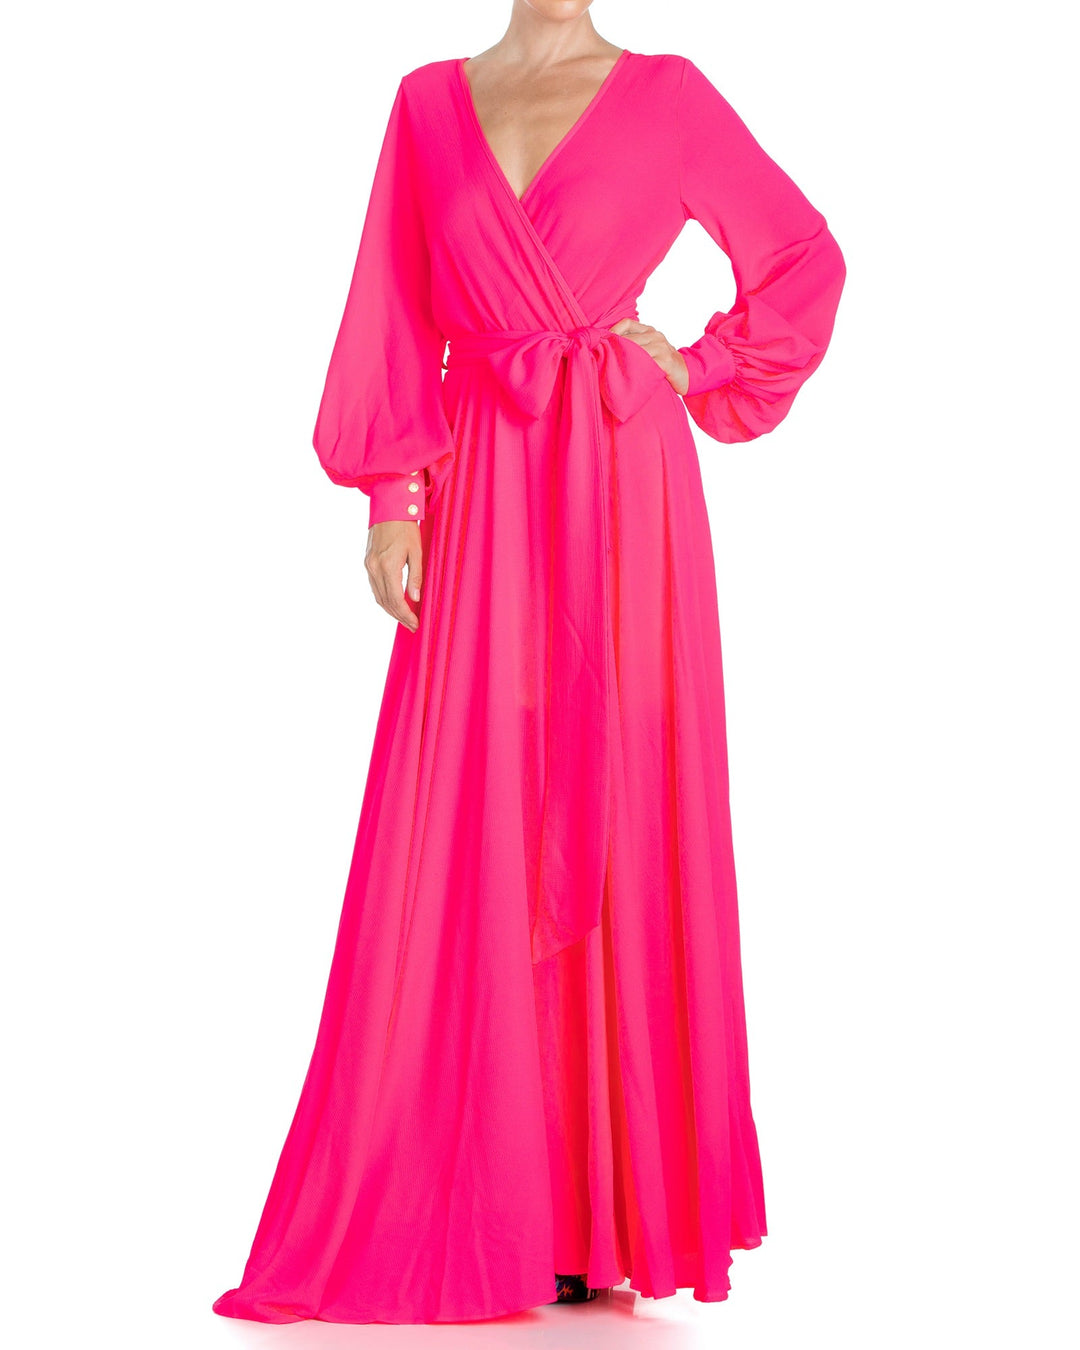 LilyPad Maxi Dress - Neon Pink by Meghan Fabulous